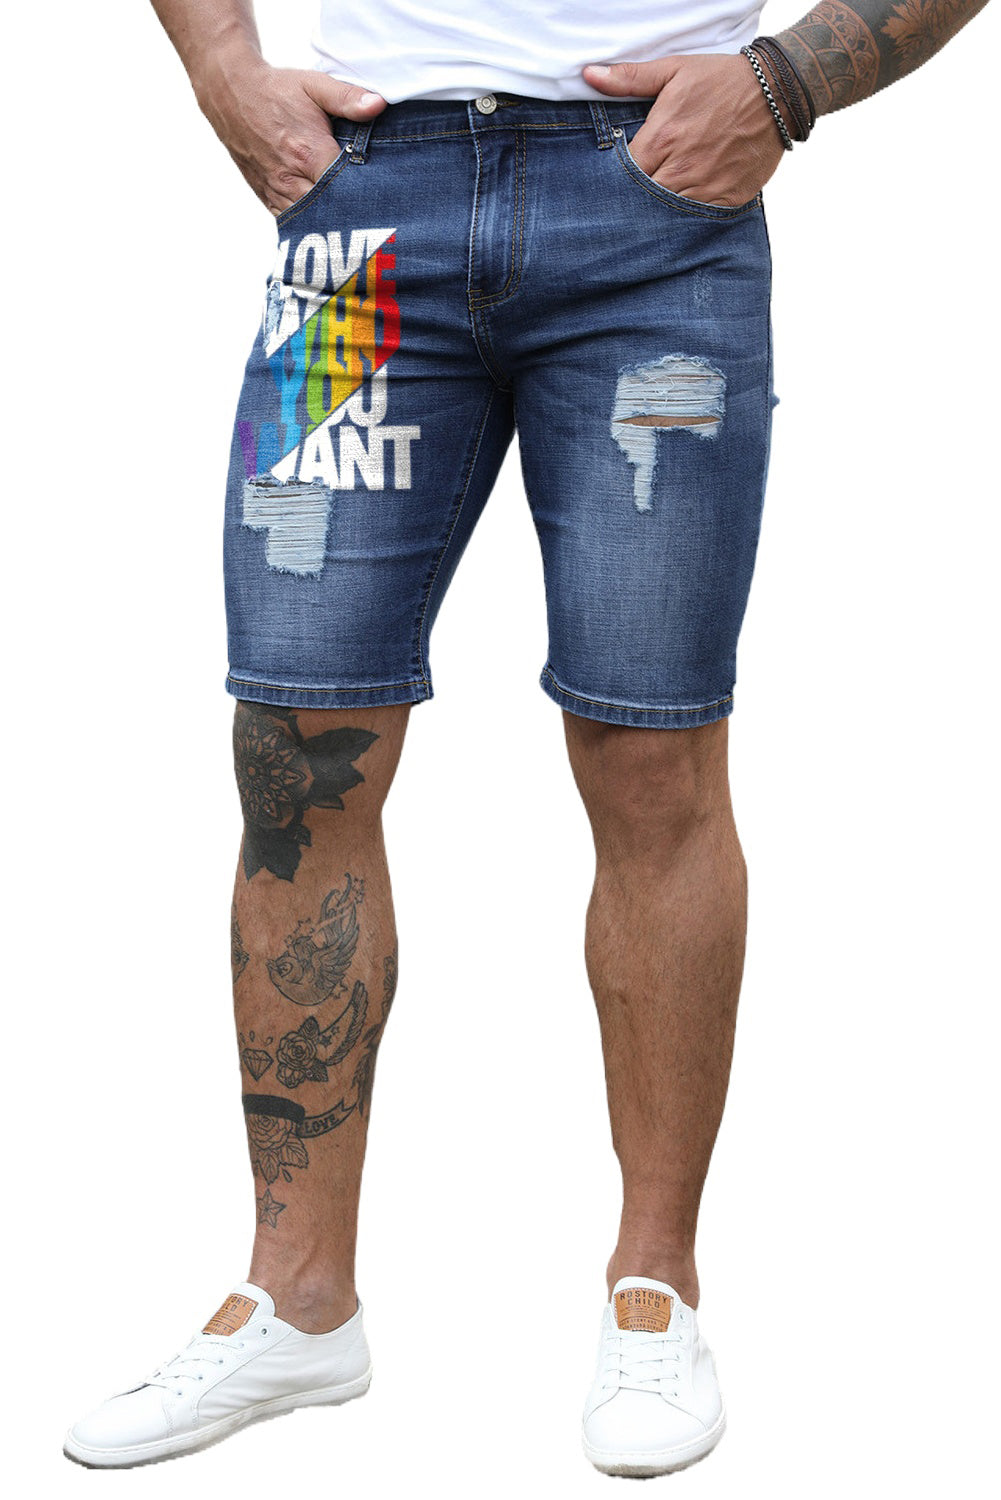 Blue Love Who You Want Print Men's Ripped Short Jeans Men's Pants JT's Designer Fashion